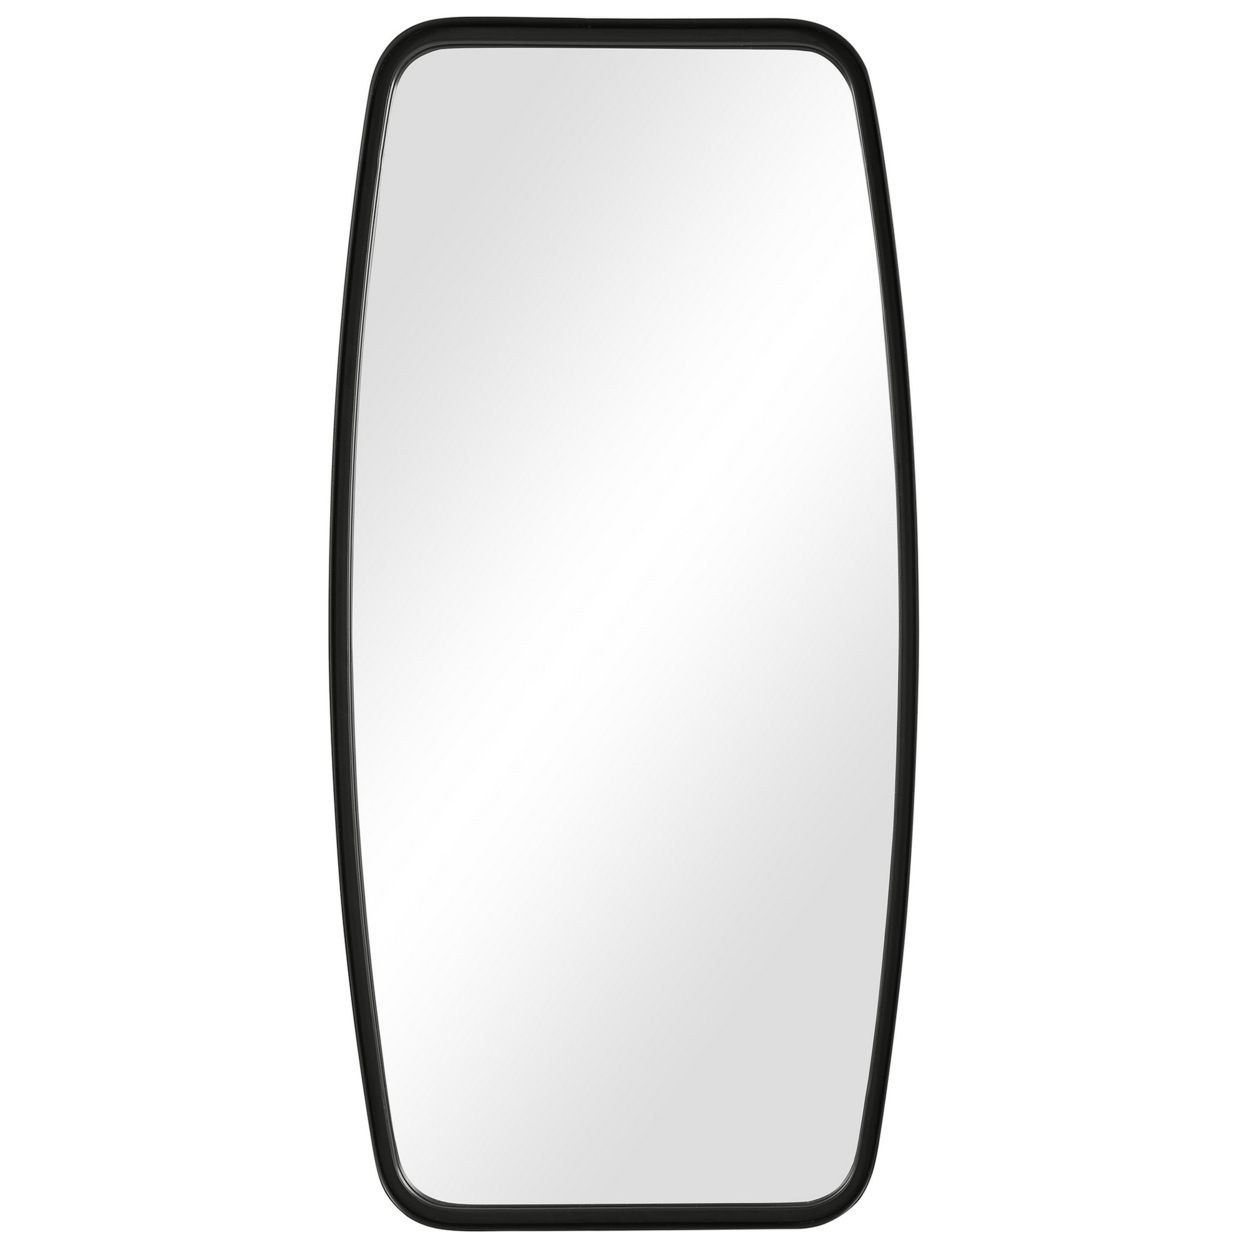 Rectangular Metal Frame Mirror With Curved Edges, Black- Saltoro Sherpi